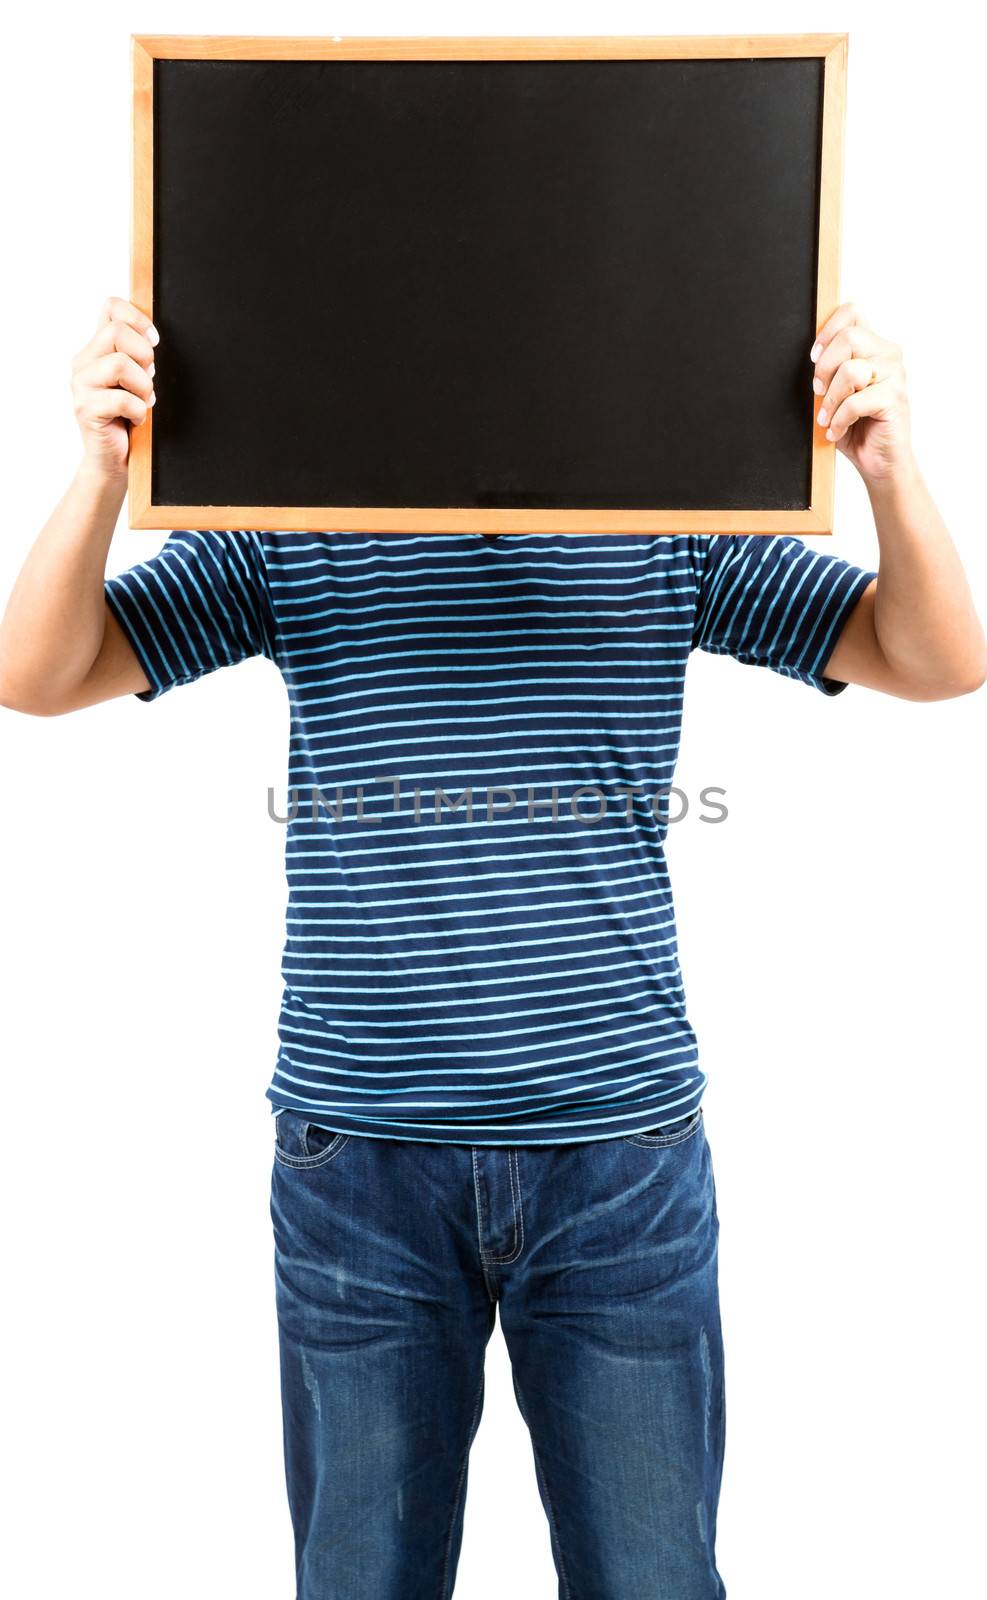 man holding blank blackboard by vichie81